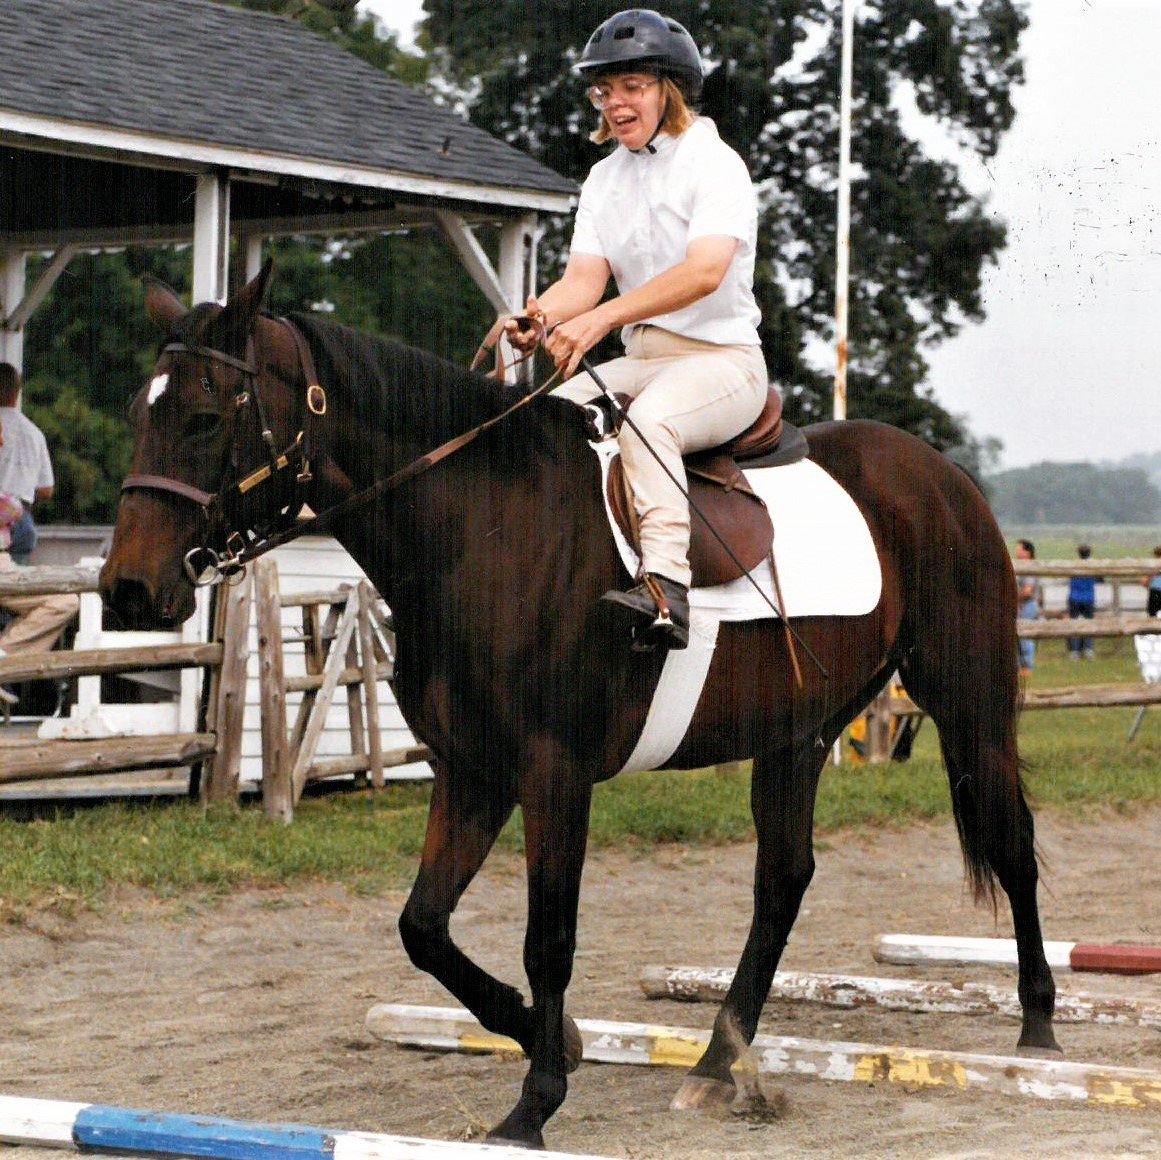 SKMBT_C22422021015140_0001-Tracy Cole - 1999 Horse Show_2sq.jpg